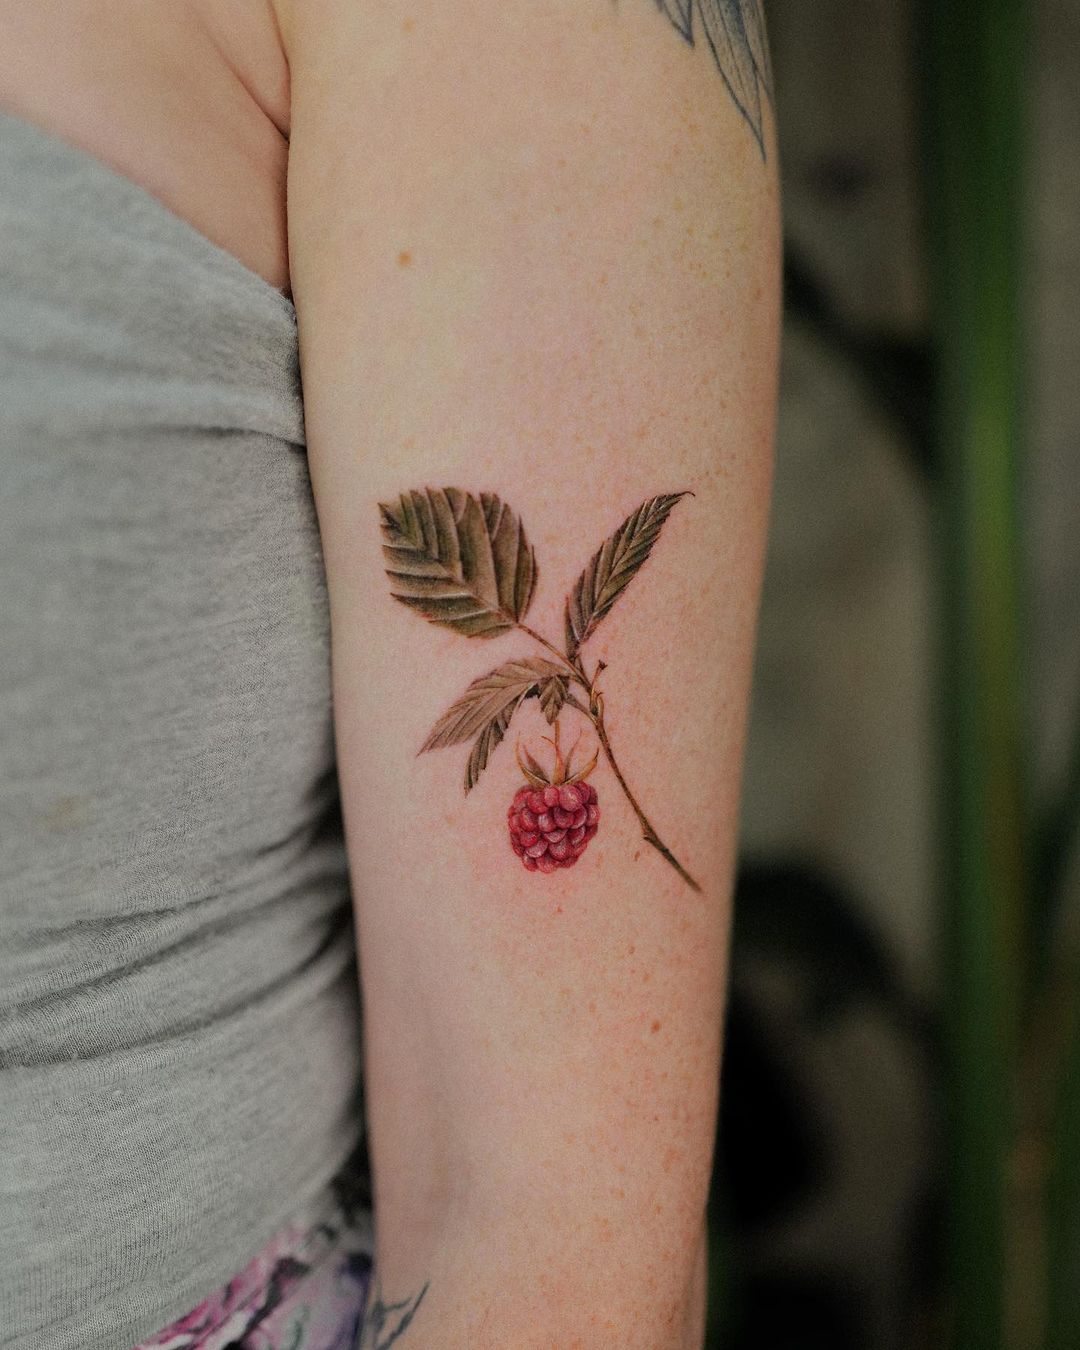 Raspberry arm tattoo